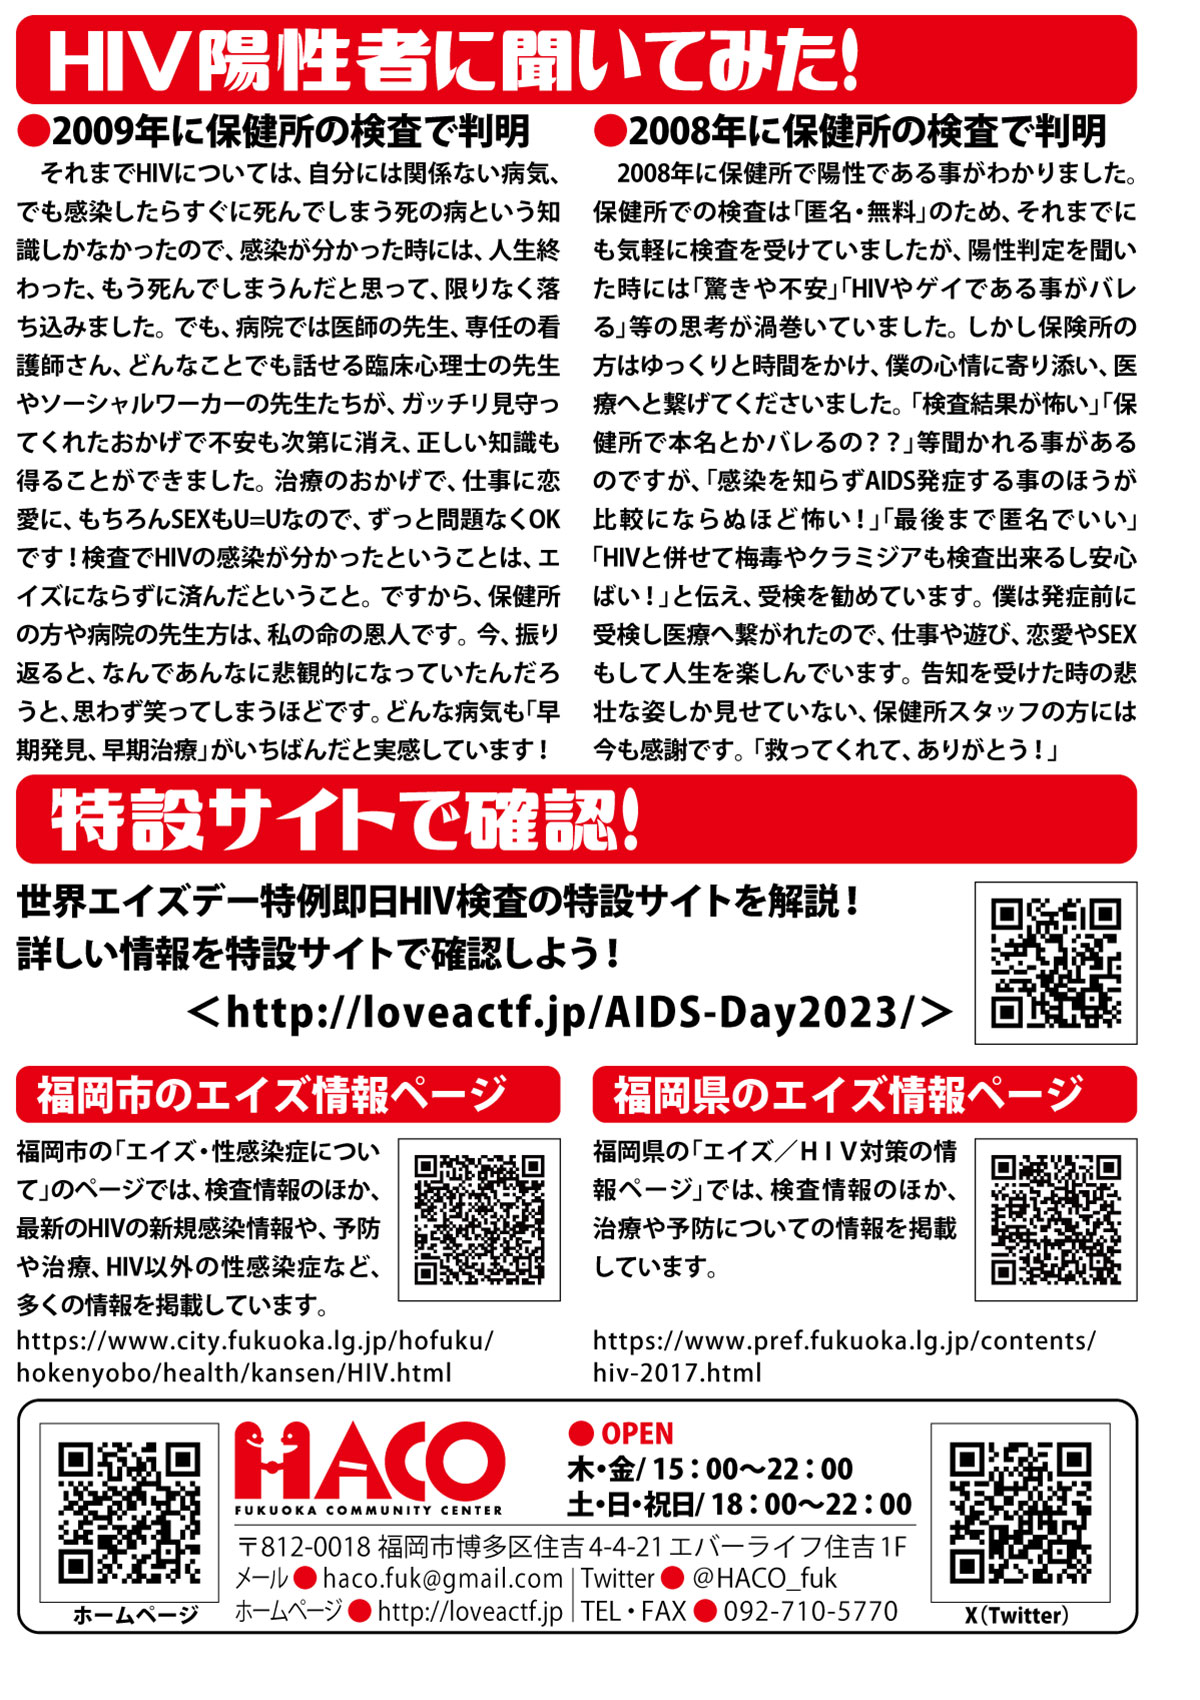 NEW SEASON vol.7 無料・匿名・即日HIV特例検査！